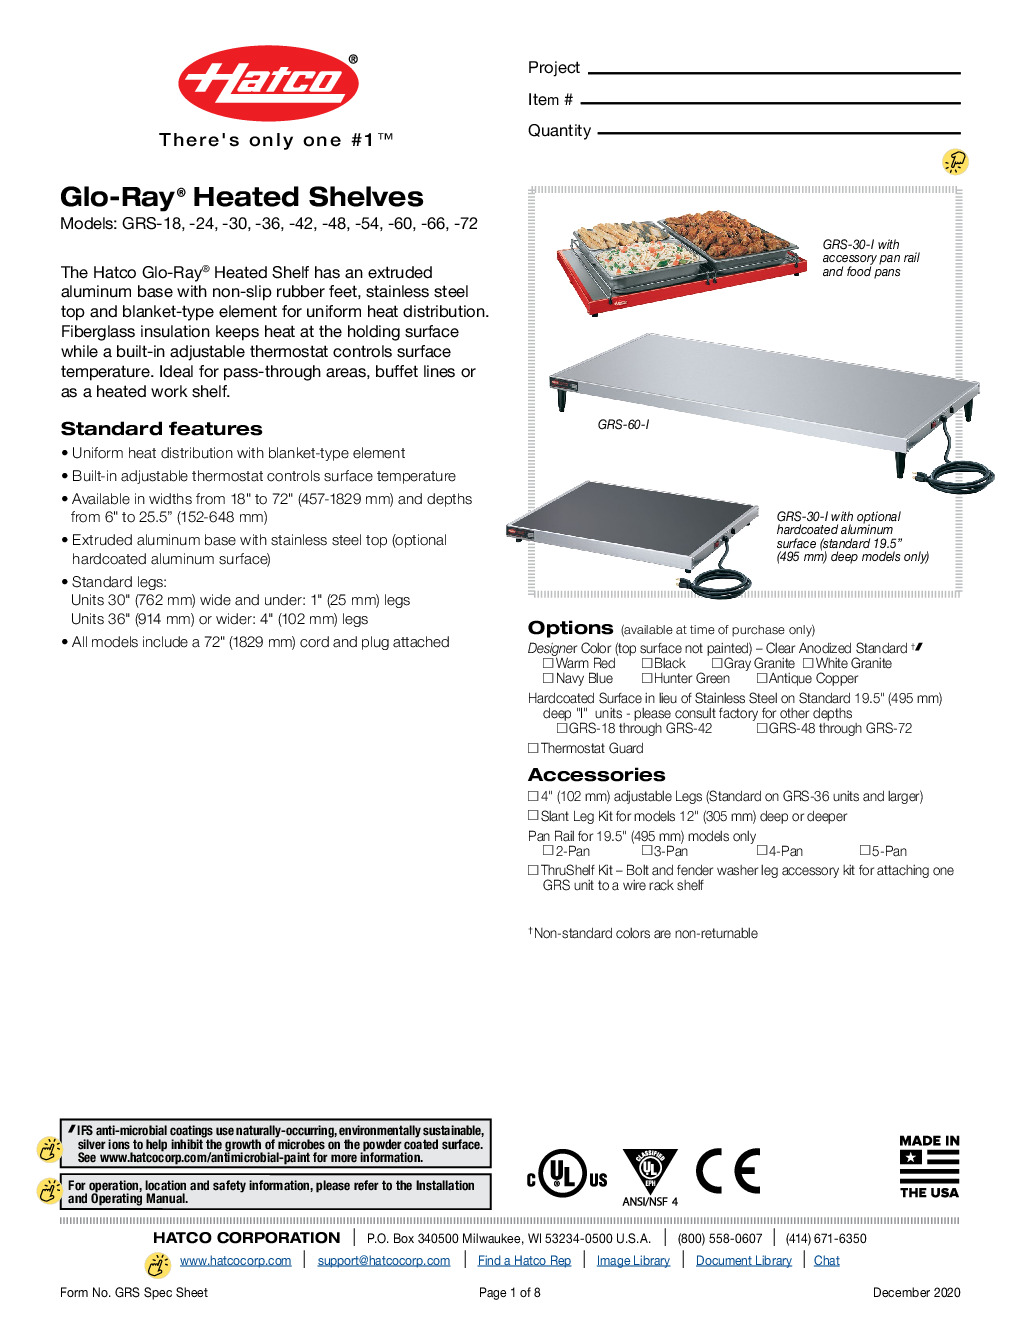 Hatco GRS-36 Glo-Ray Heated Shelves